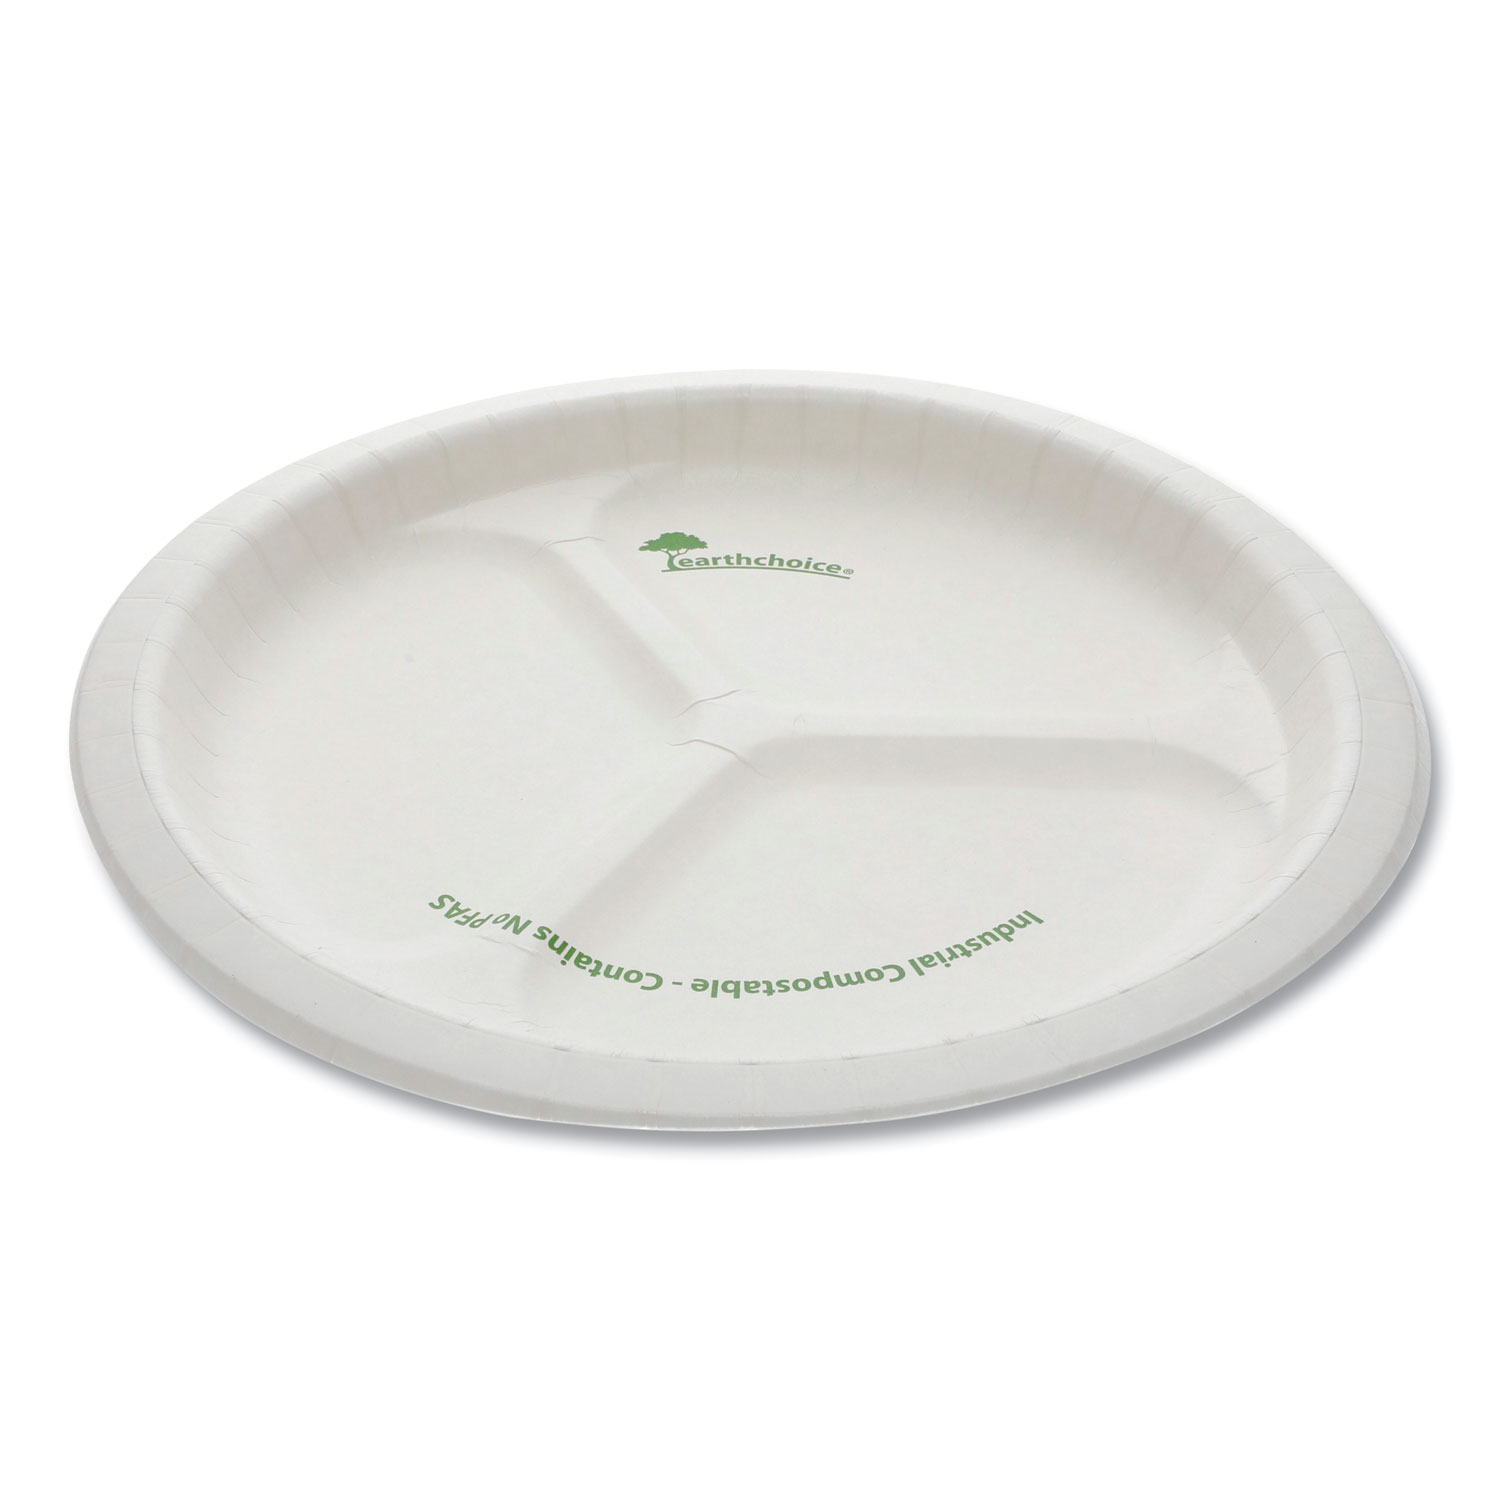 Pactiv EarthChoice Pressware Compostable Dinnerware, 3-Compartment Plate, 10 Diameter, White, 250/Carton